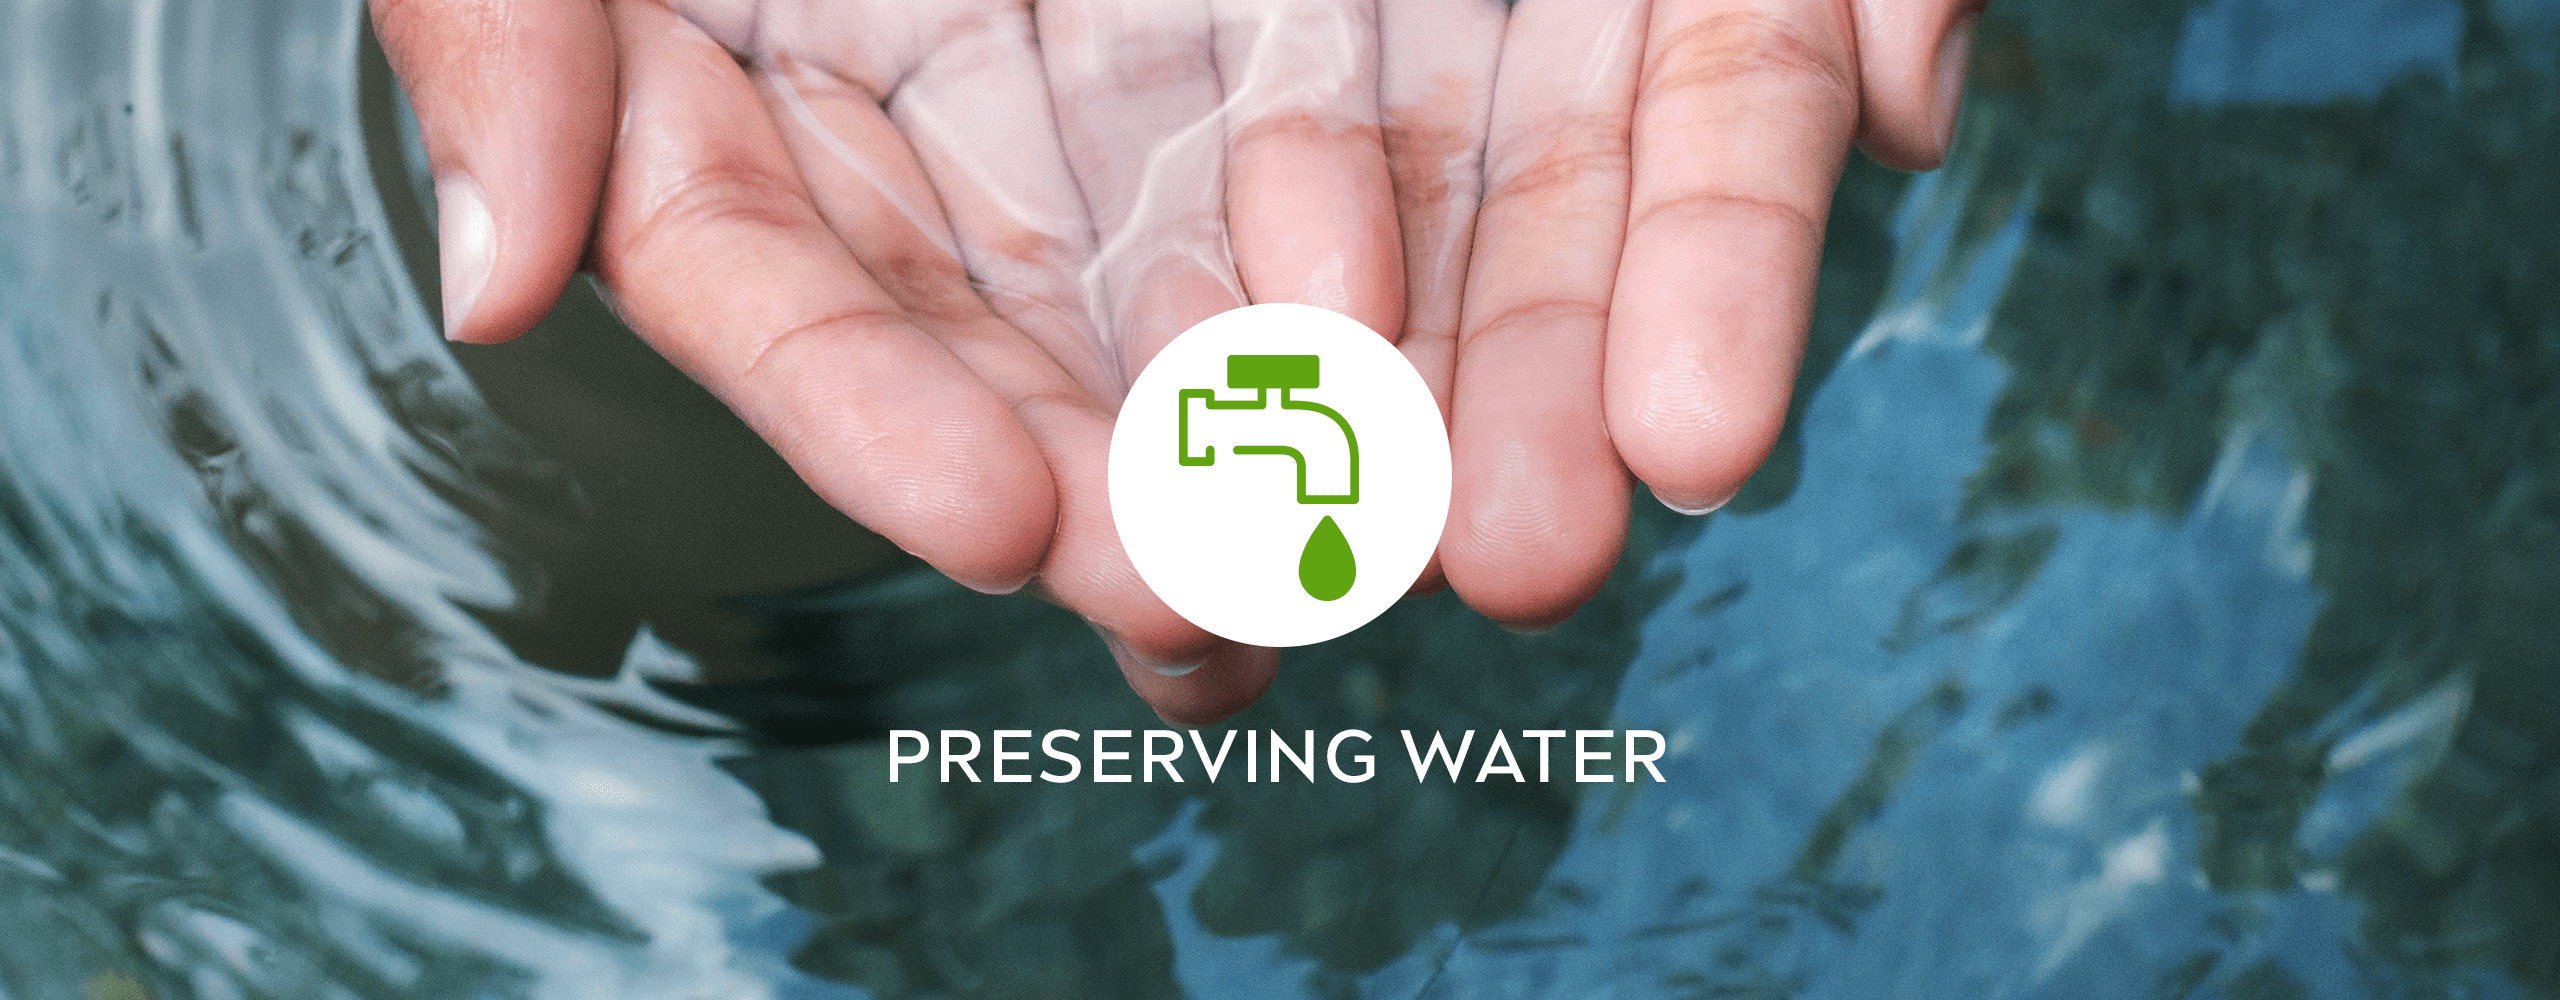 PRESERVING WATER